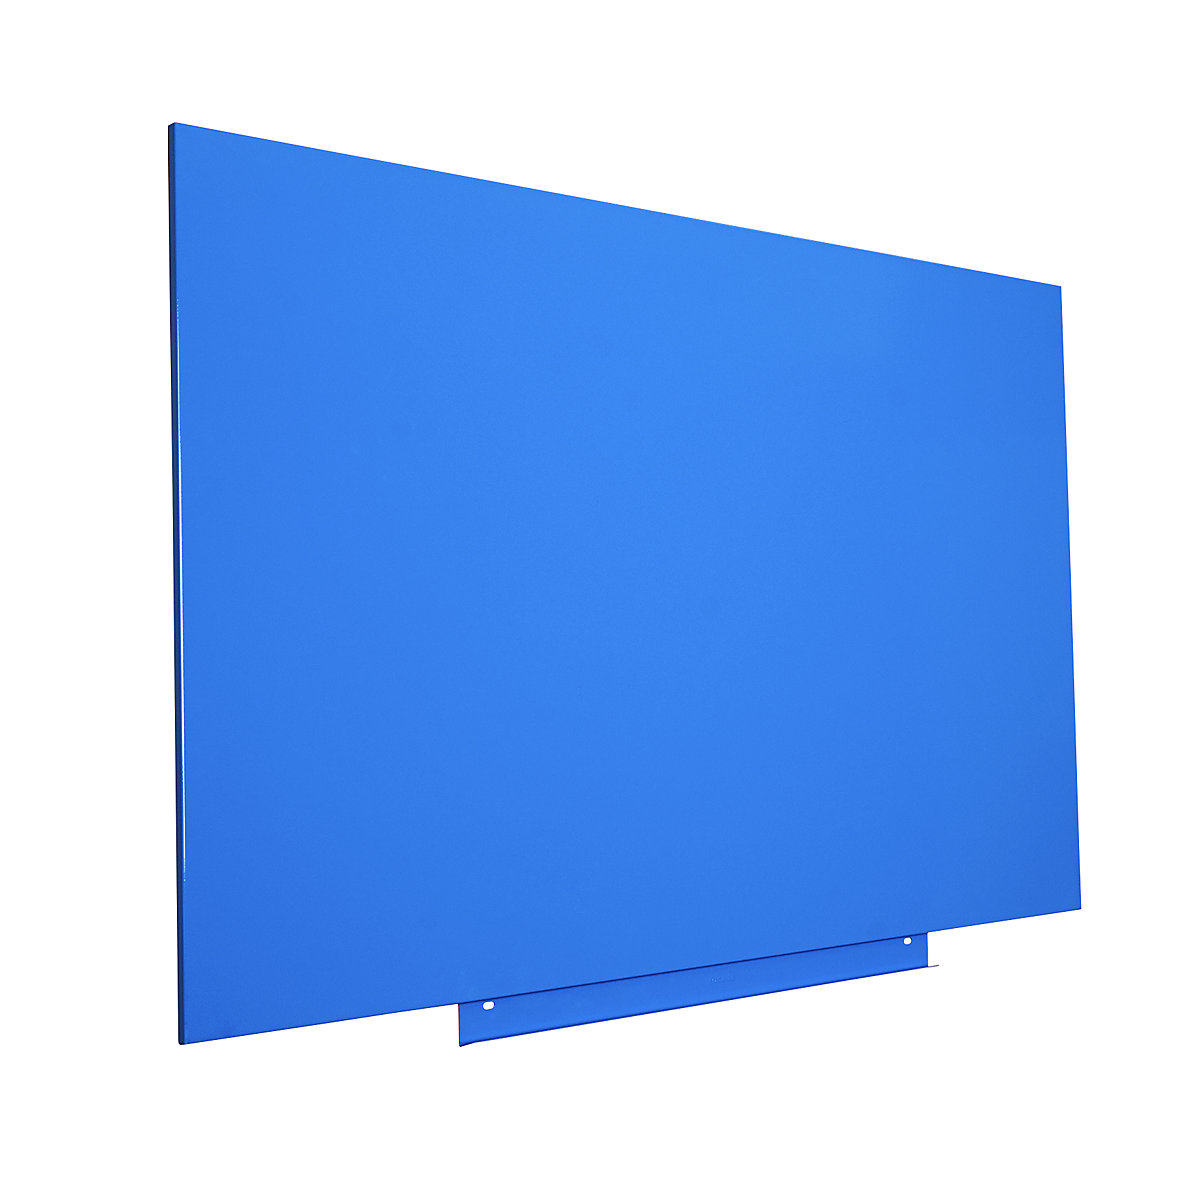 Modulo per lavagne bianche, versione BASIC – lamiera d'acciaio, verniciata, largh. x alt. 750 x 1150 mm, blu pastello-19